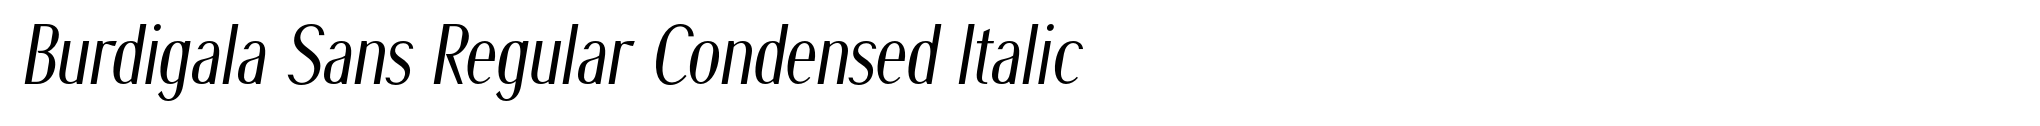 Burdigala Sans Regular Condensed Italic image